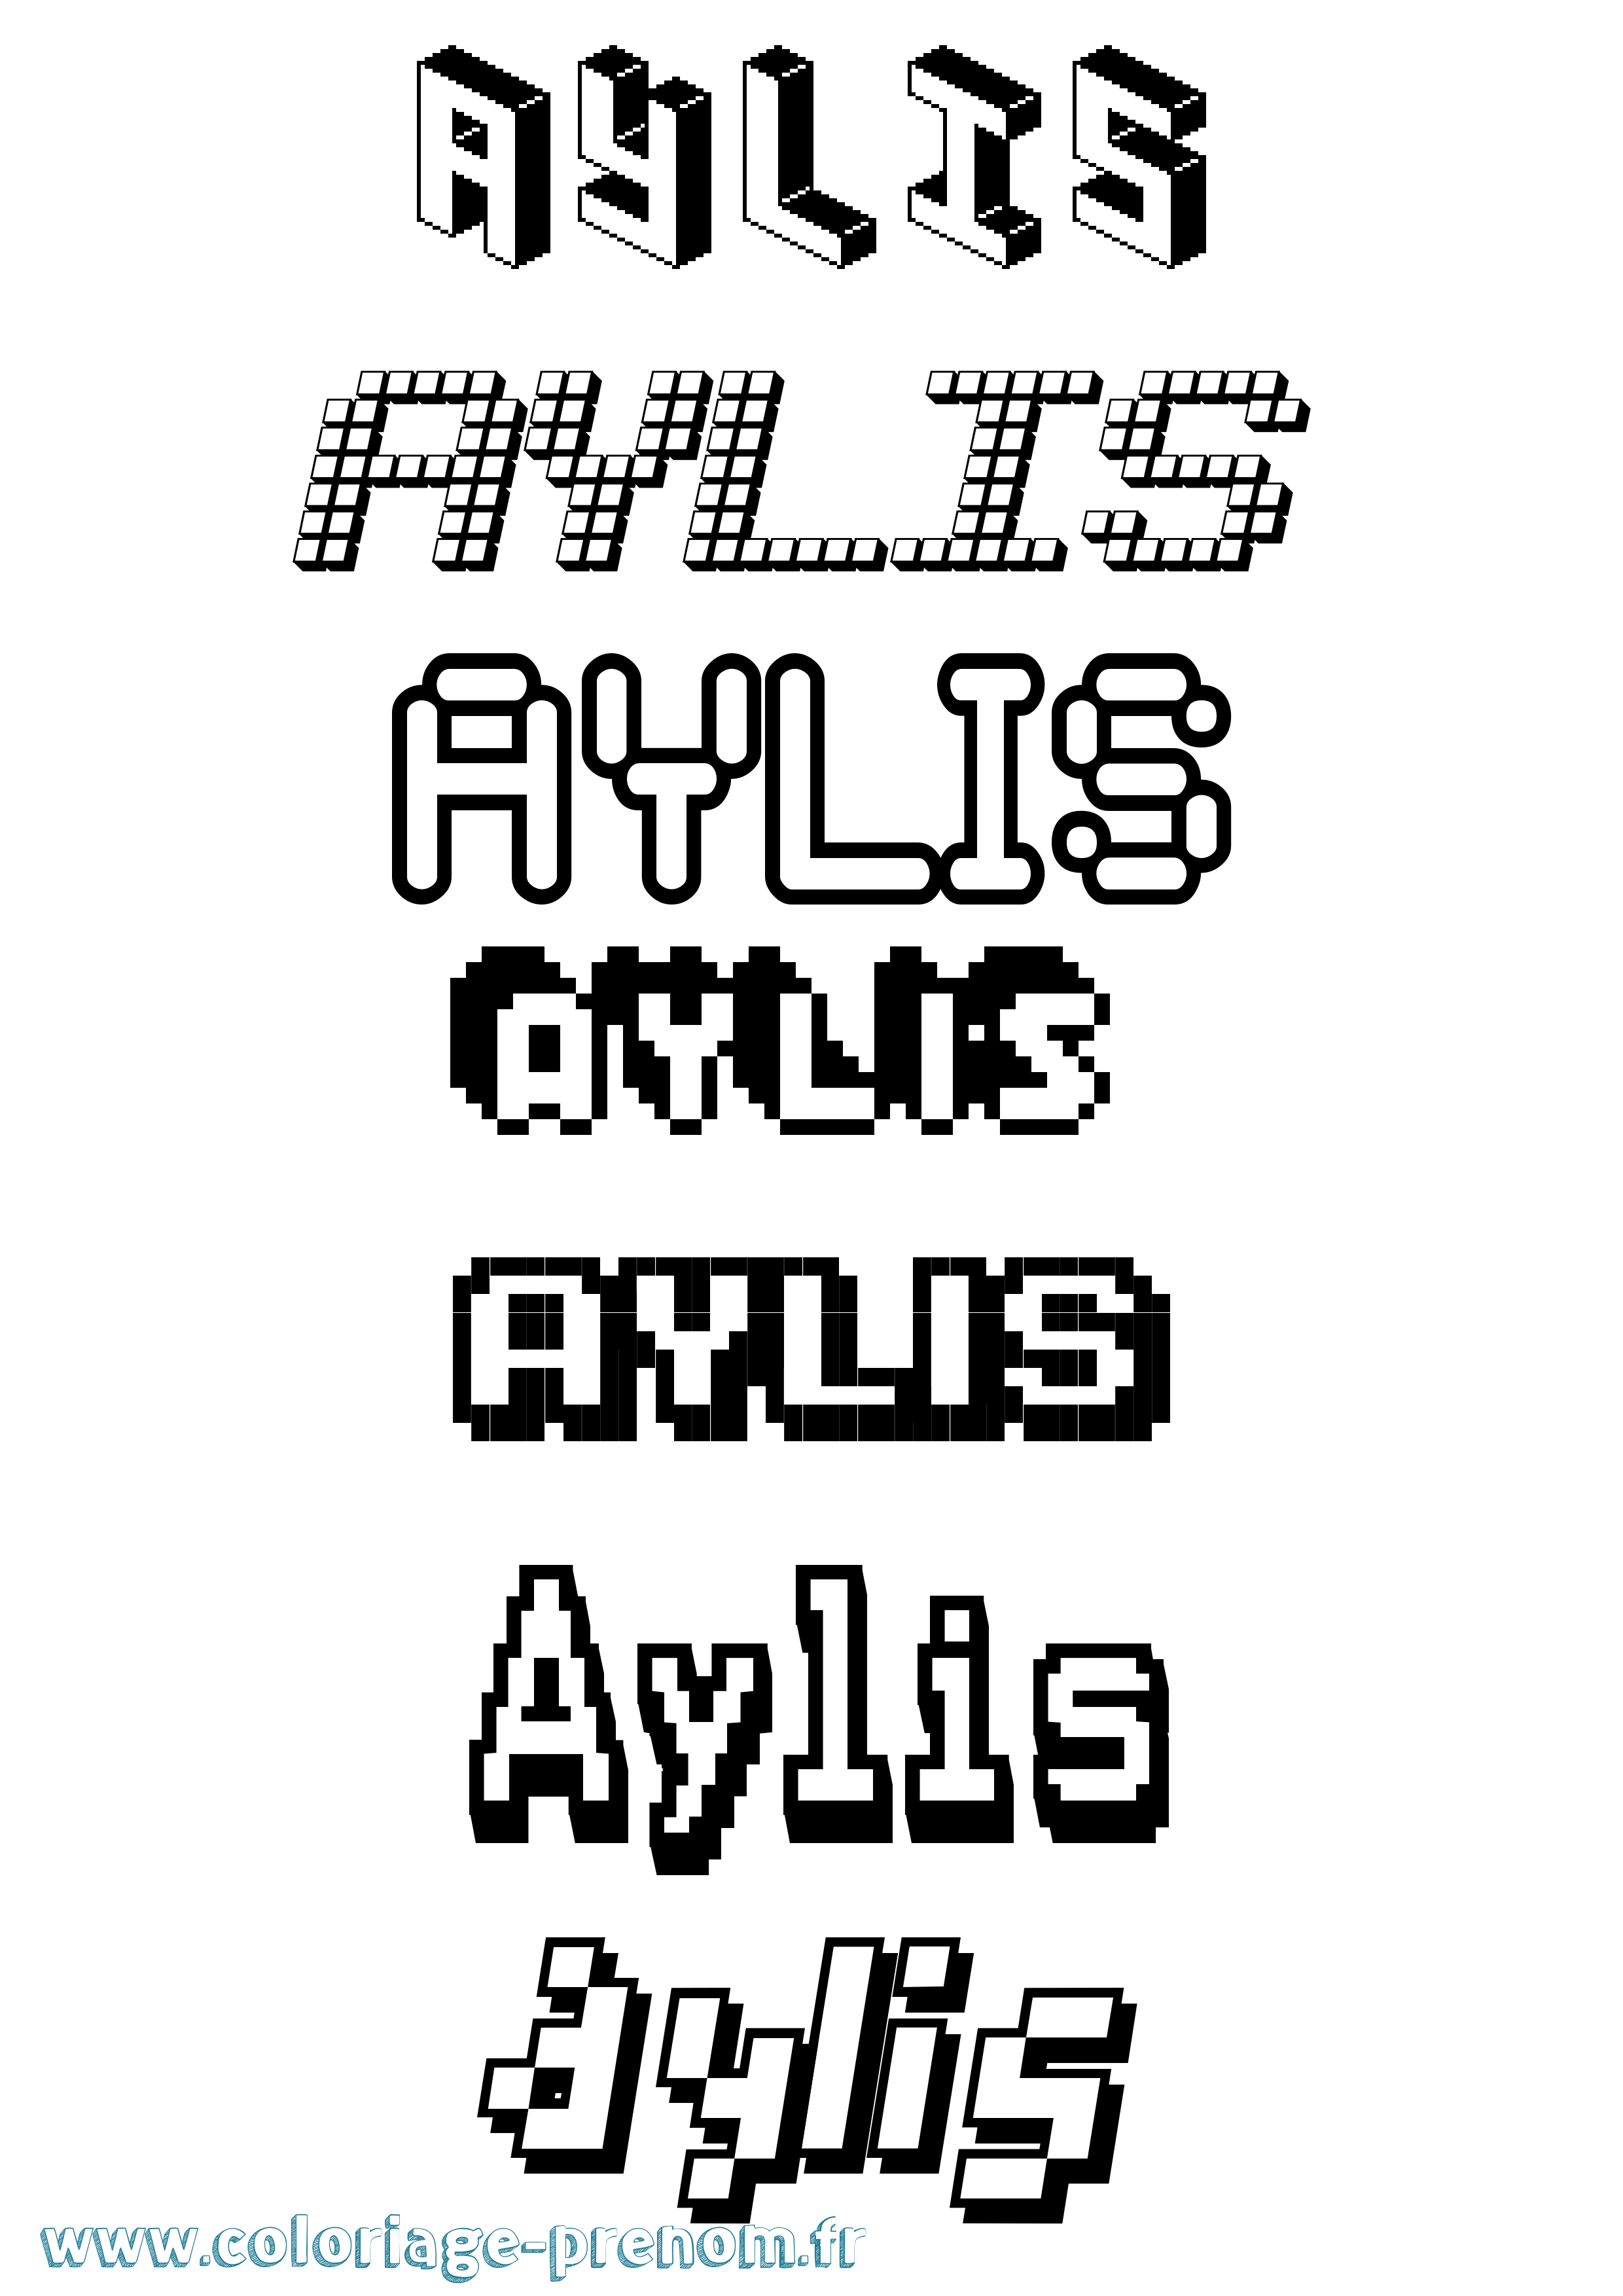 Coloriage prénom Aylis Pixel